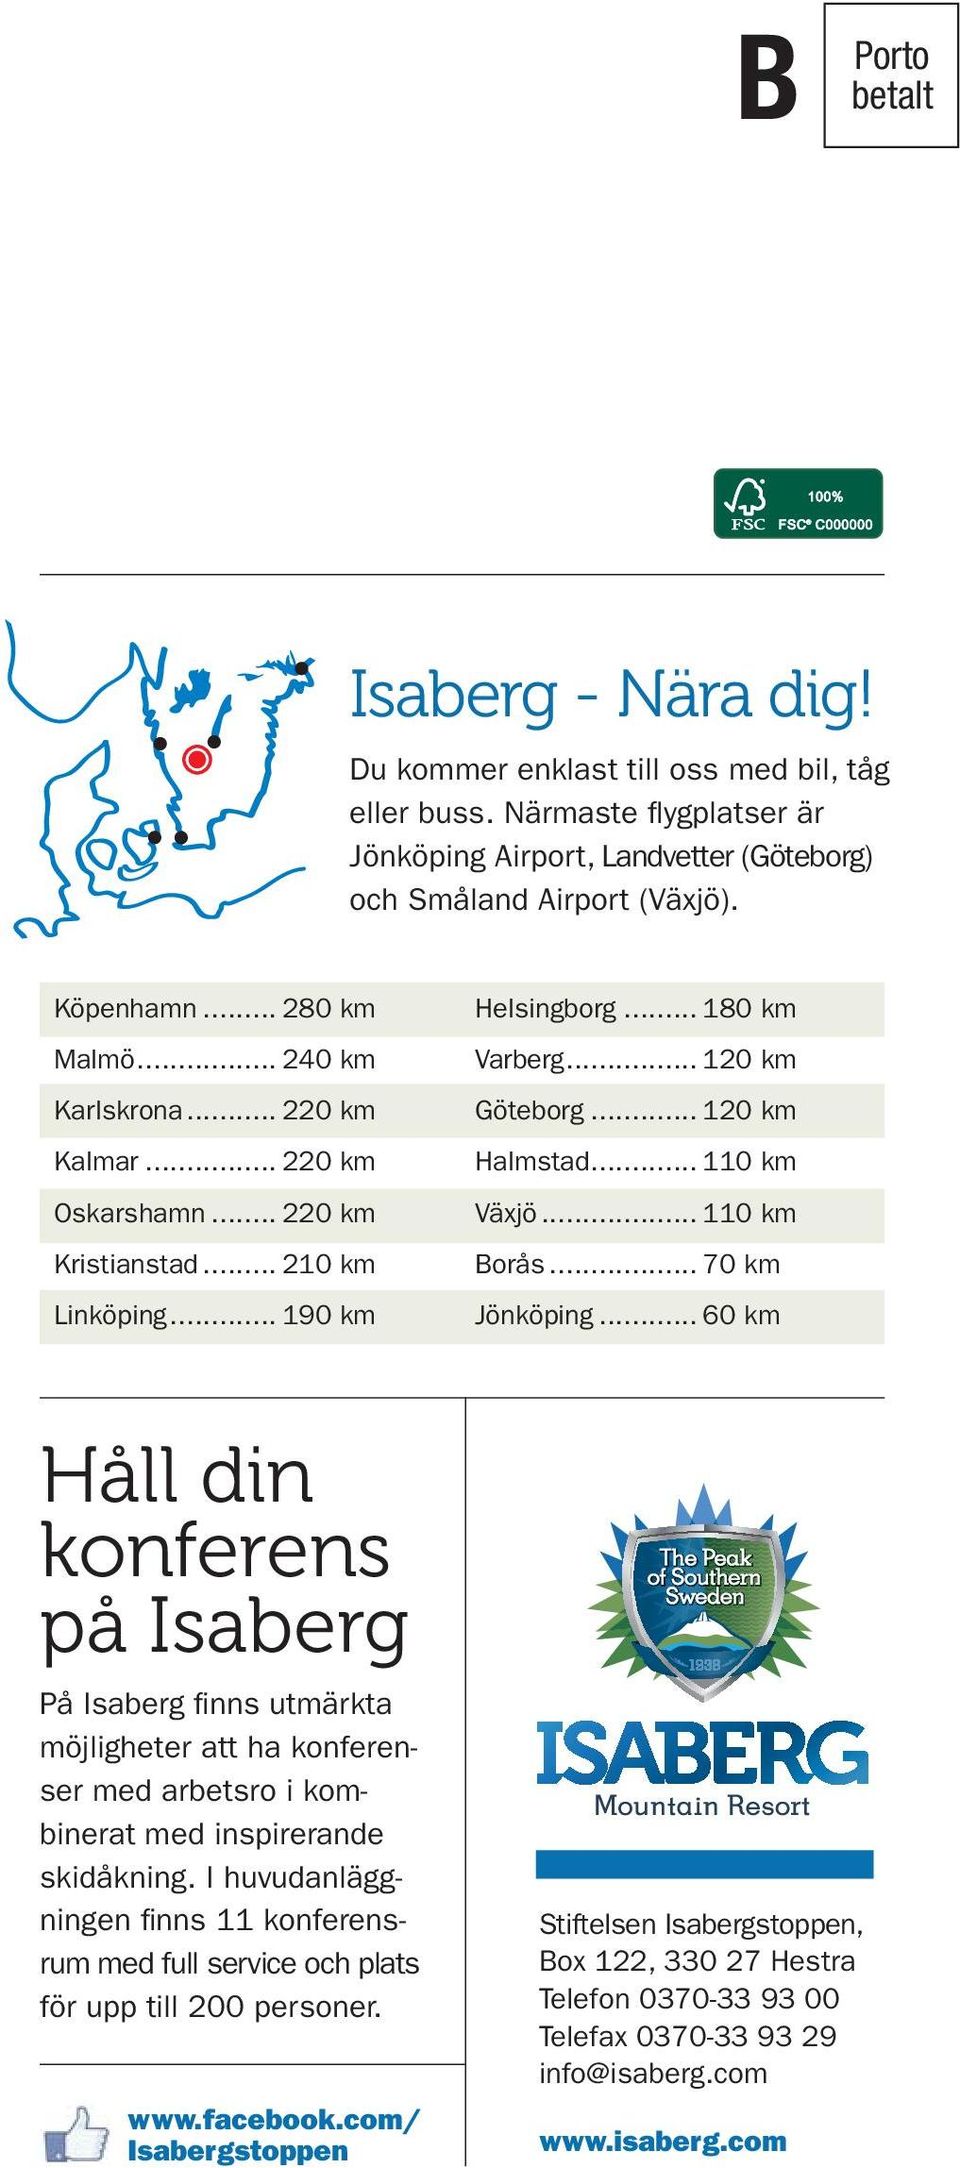 .. 220 km Kalmar... 220 km Oskarshamn... 220 km Kristianstad... 210 km Linköping... 190 km Helsingborg... 180 km Varberg... 120 km Göteborg... 120 km Halmstad... 110 km Växjö... 110 km Borås.